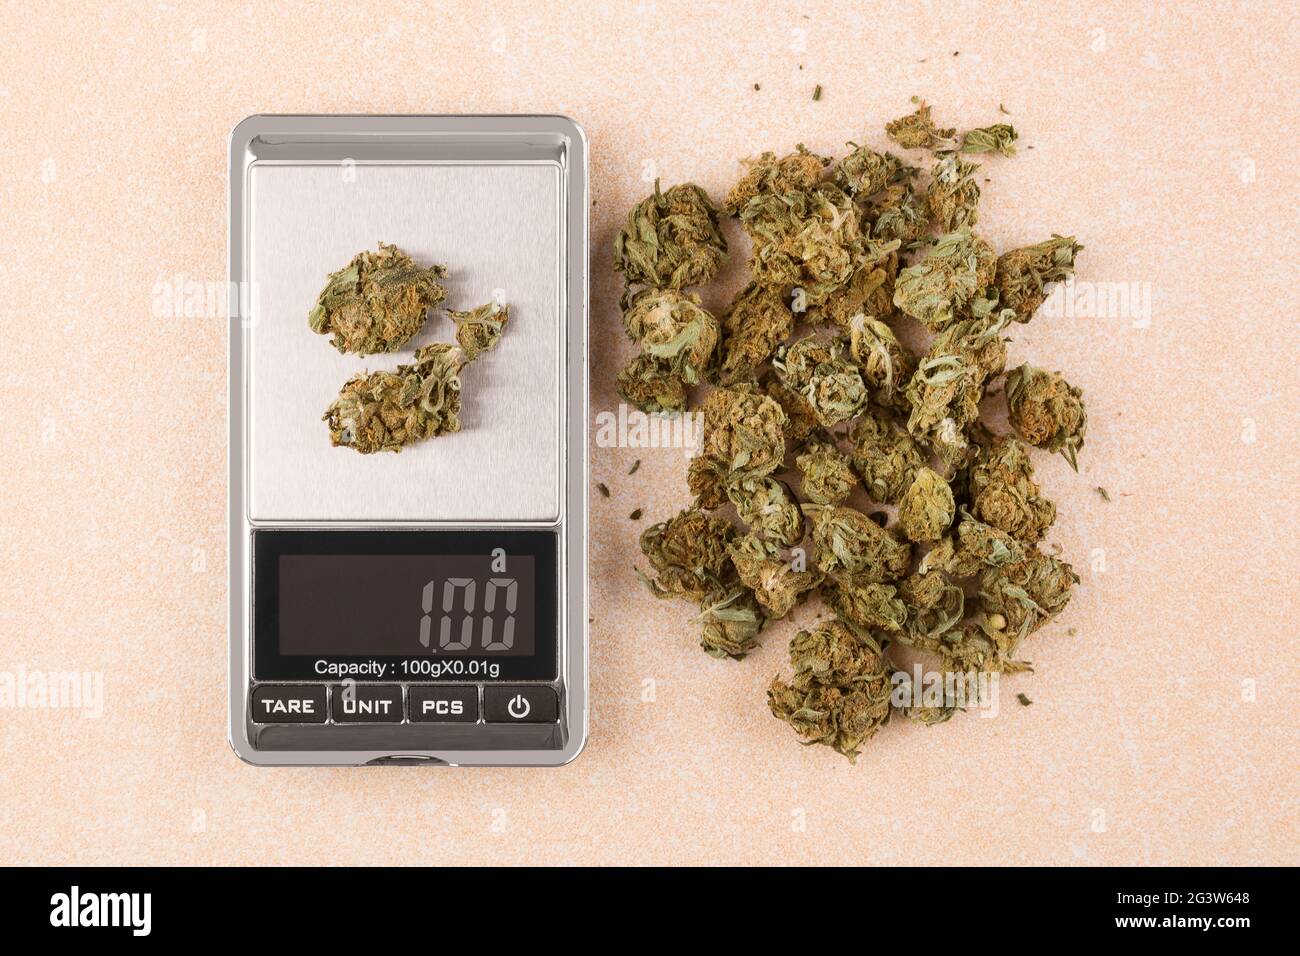 https://c8.alamy.com/comp/2G3W648/marijuana-buds-and-digital-scale-2G3W648.jpg